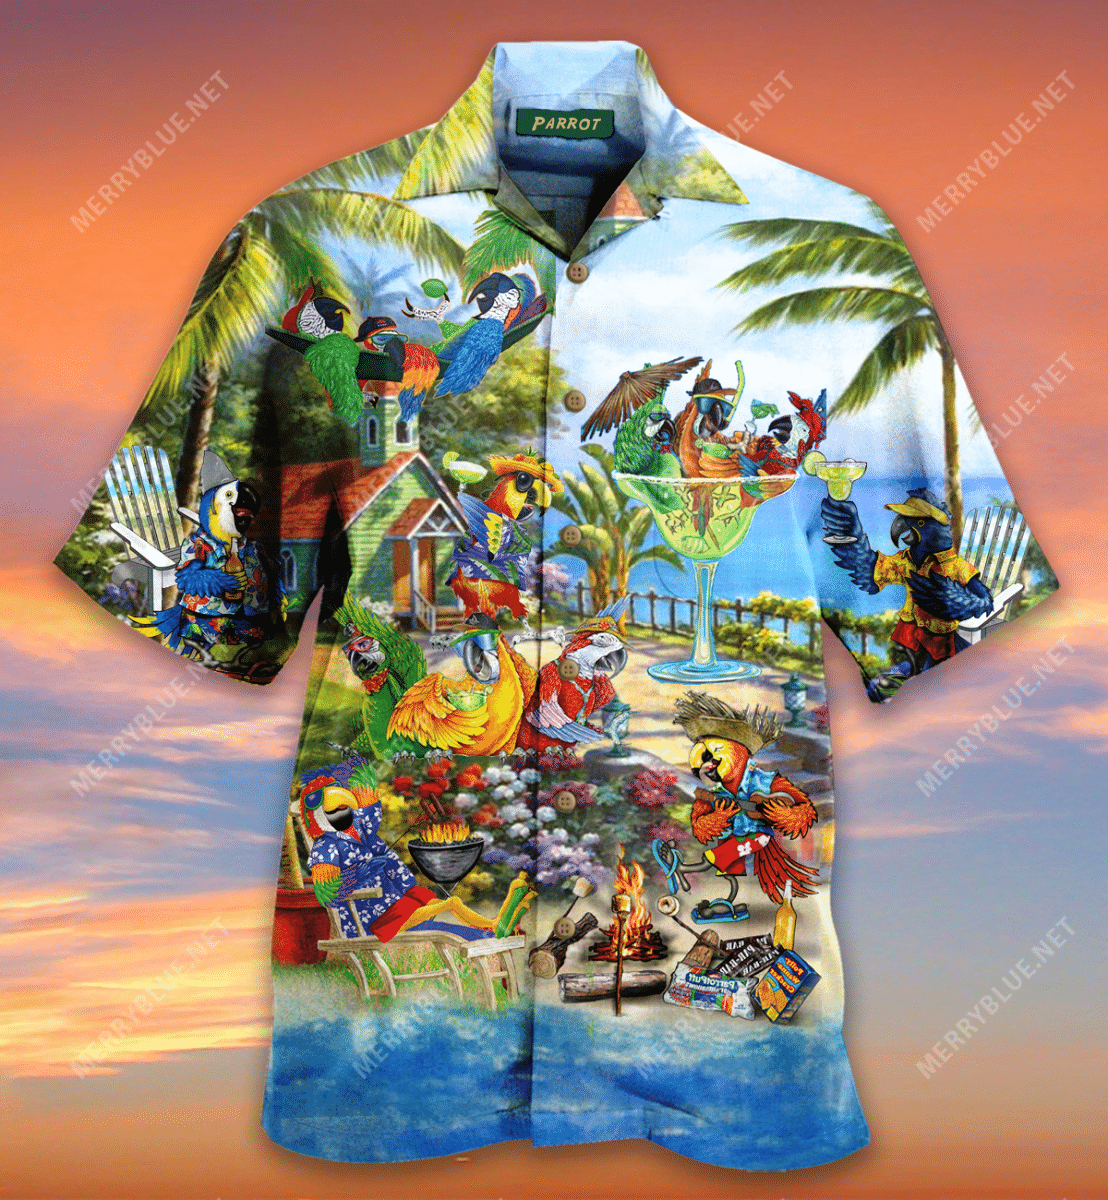 Party Parrot Hawaiian Shirt